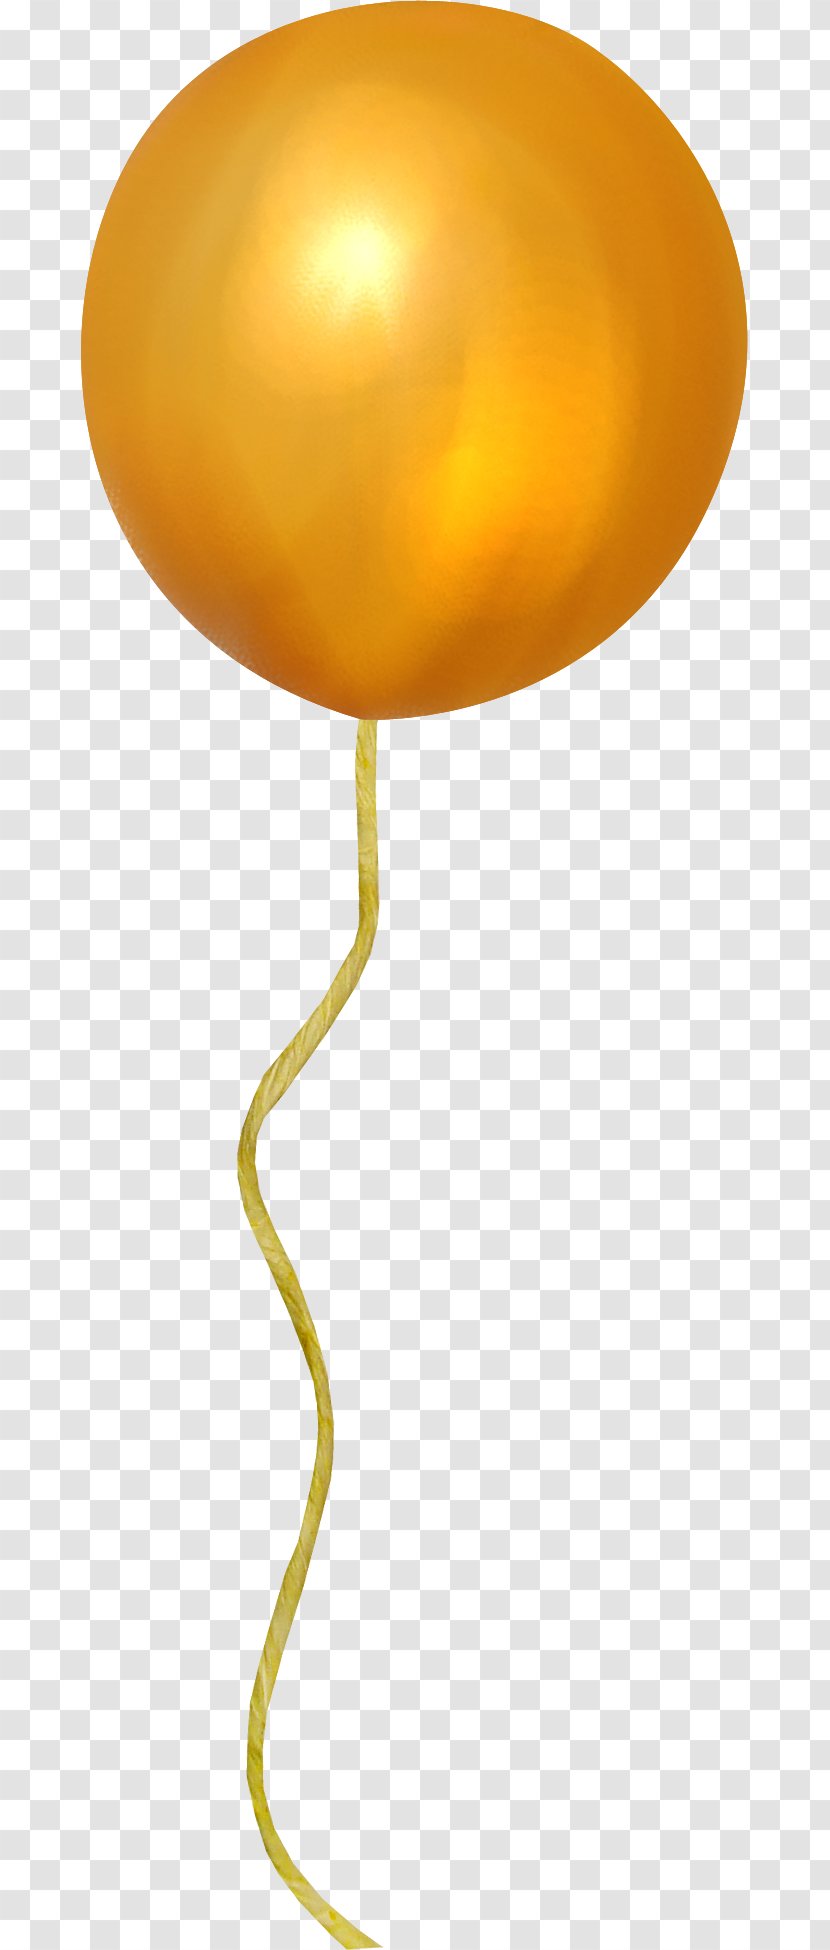 Balloon Orange Clip Art - Lamp - BALOON Transparent PNG